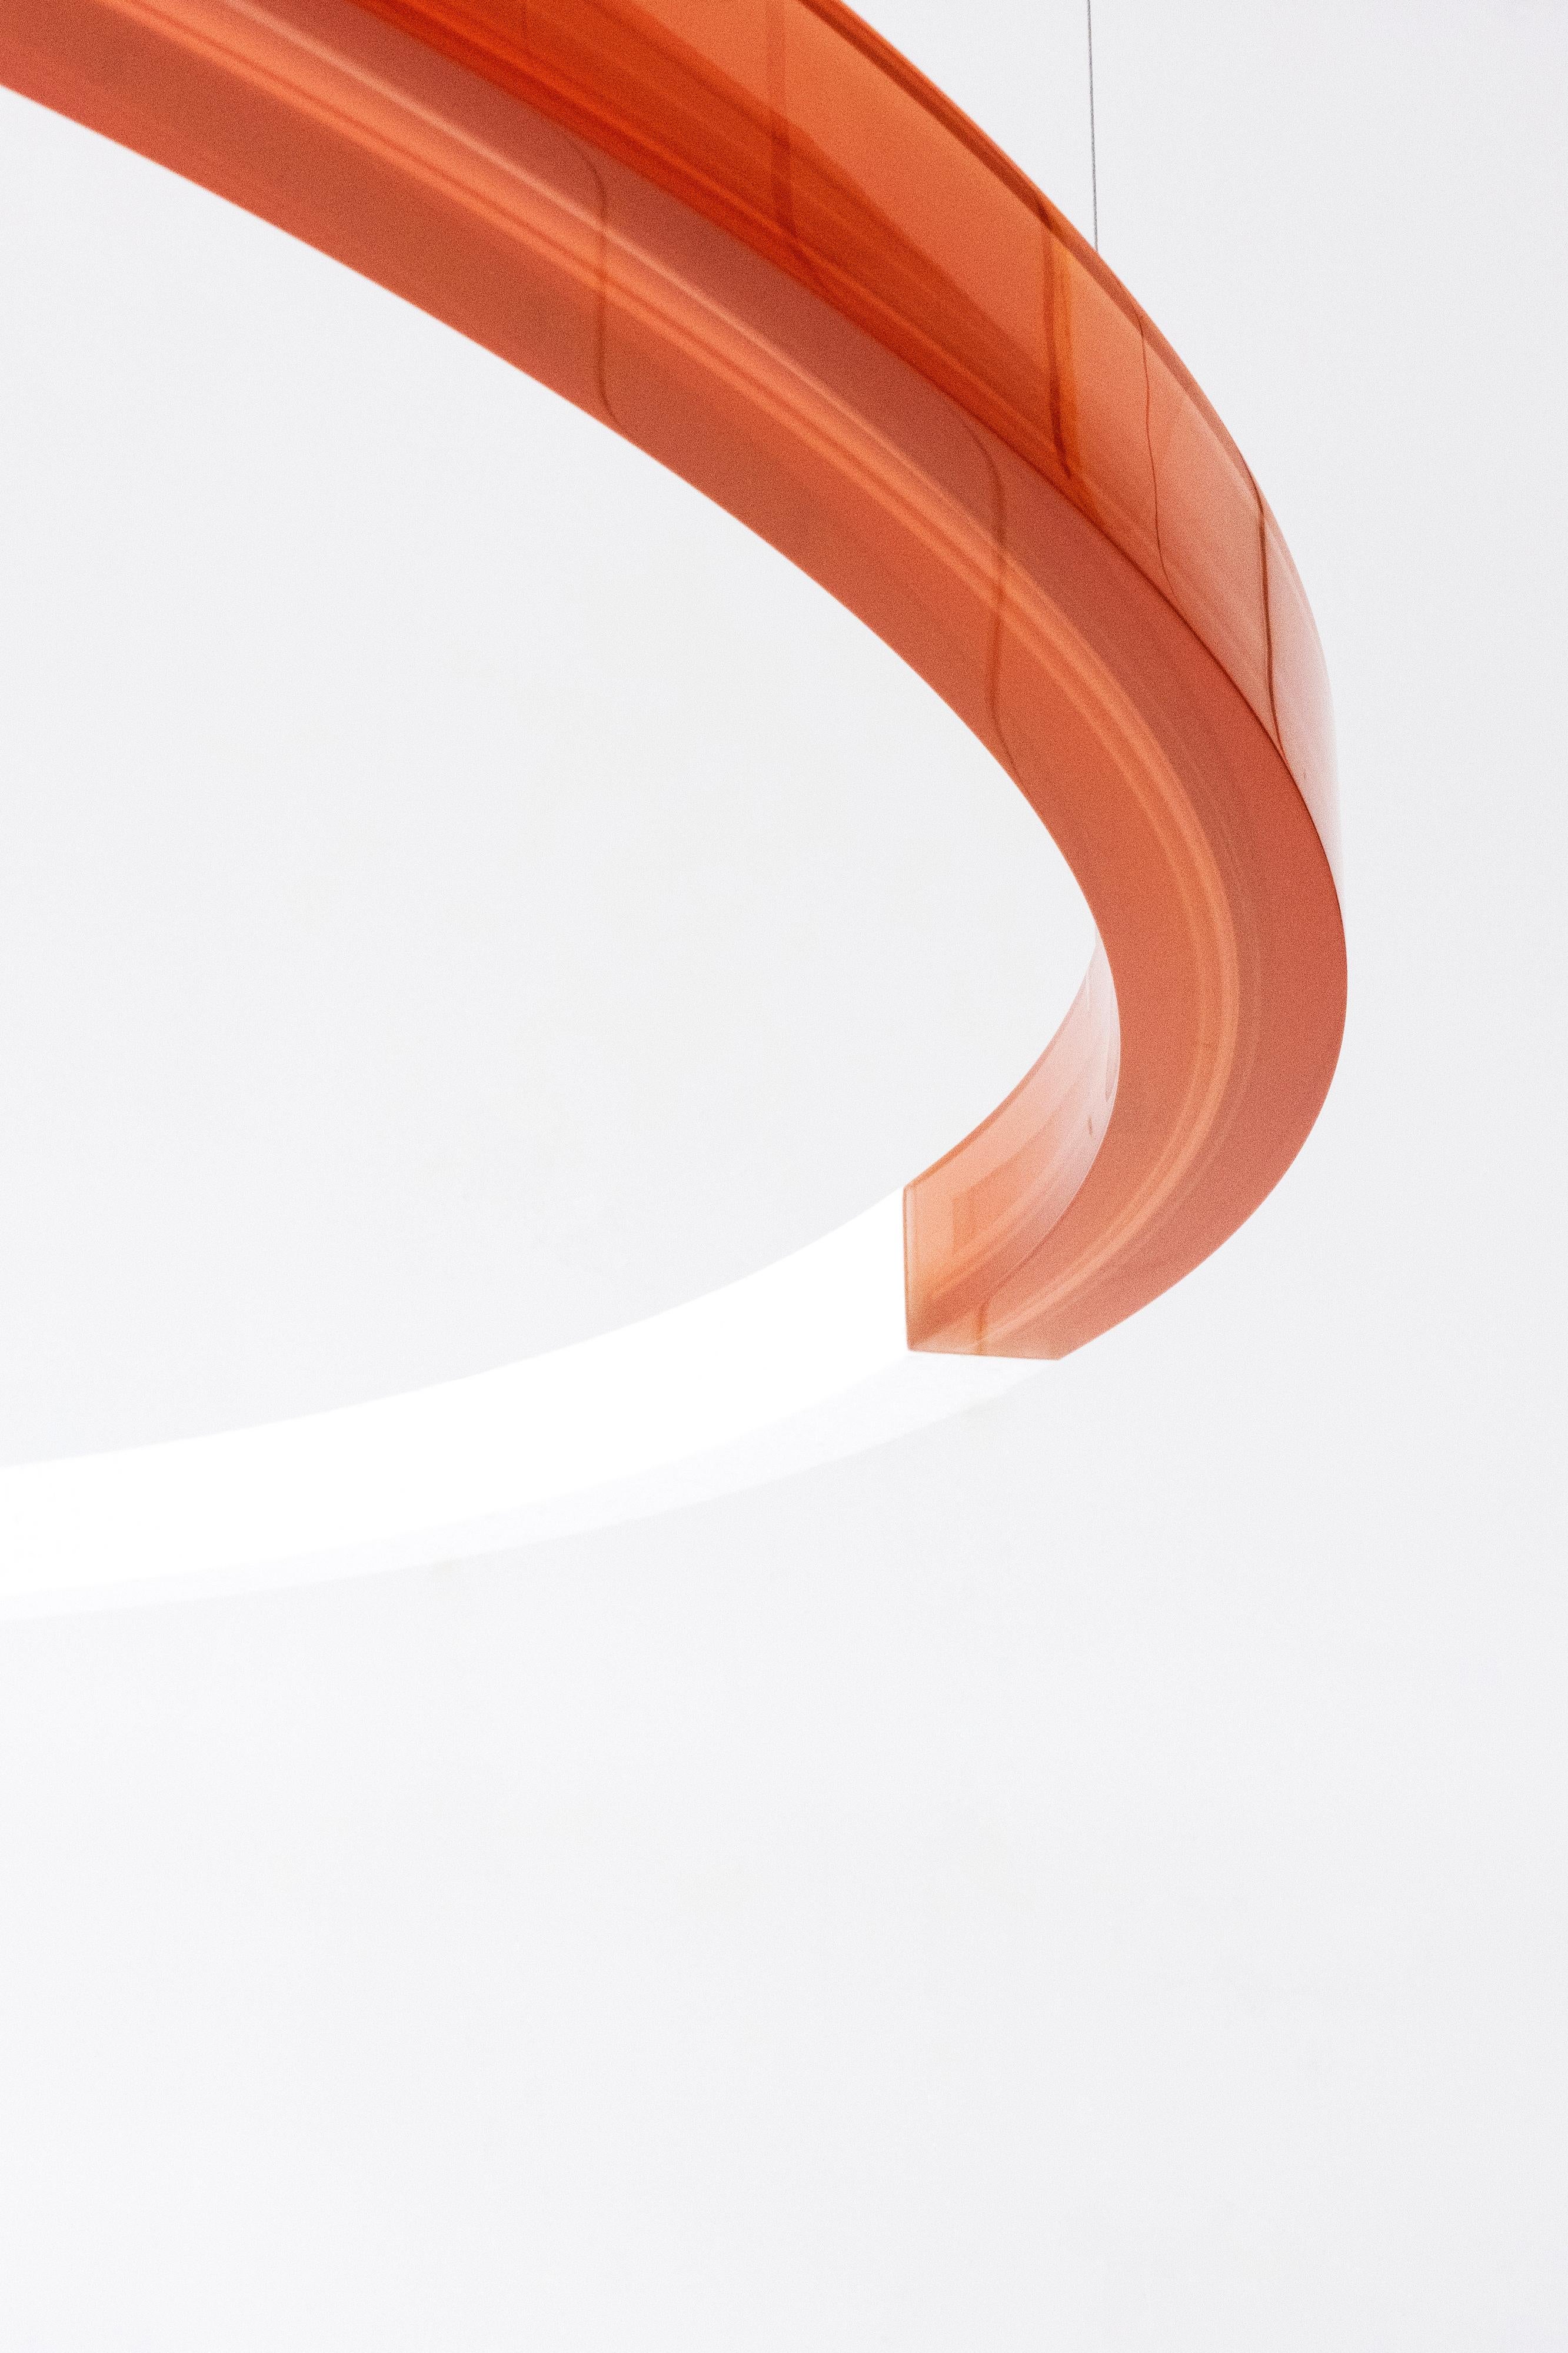 Dutch Sabine Marcelis Contemporary Amber Red Resin Circular Pendant Lamp Filter Series For Sale